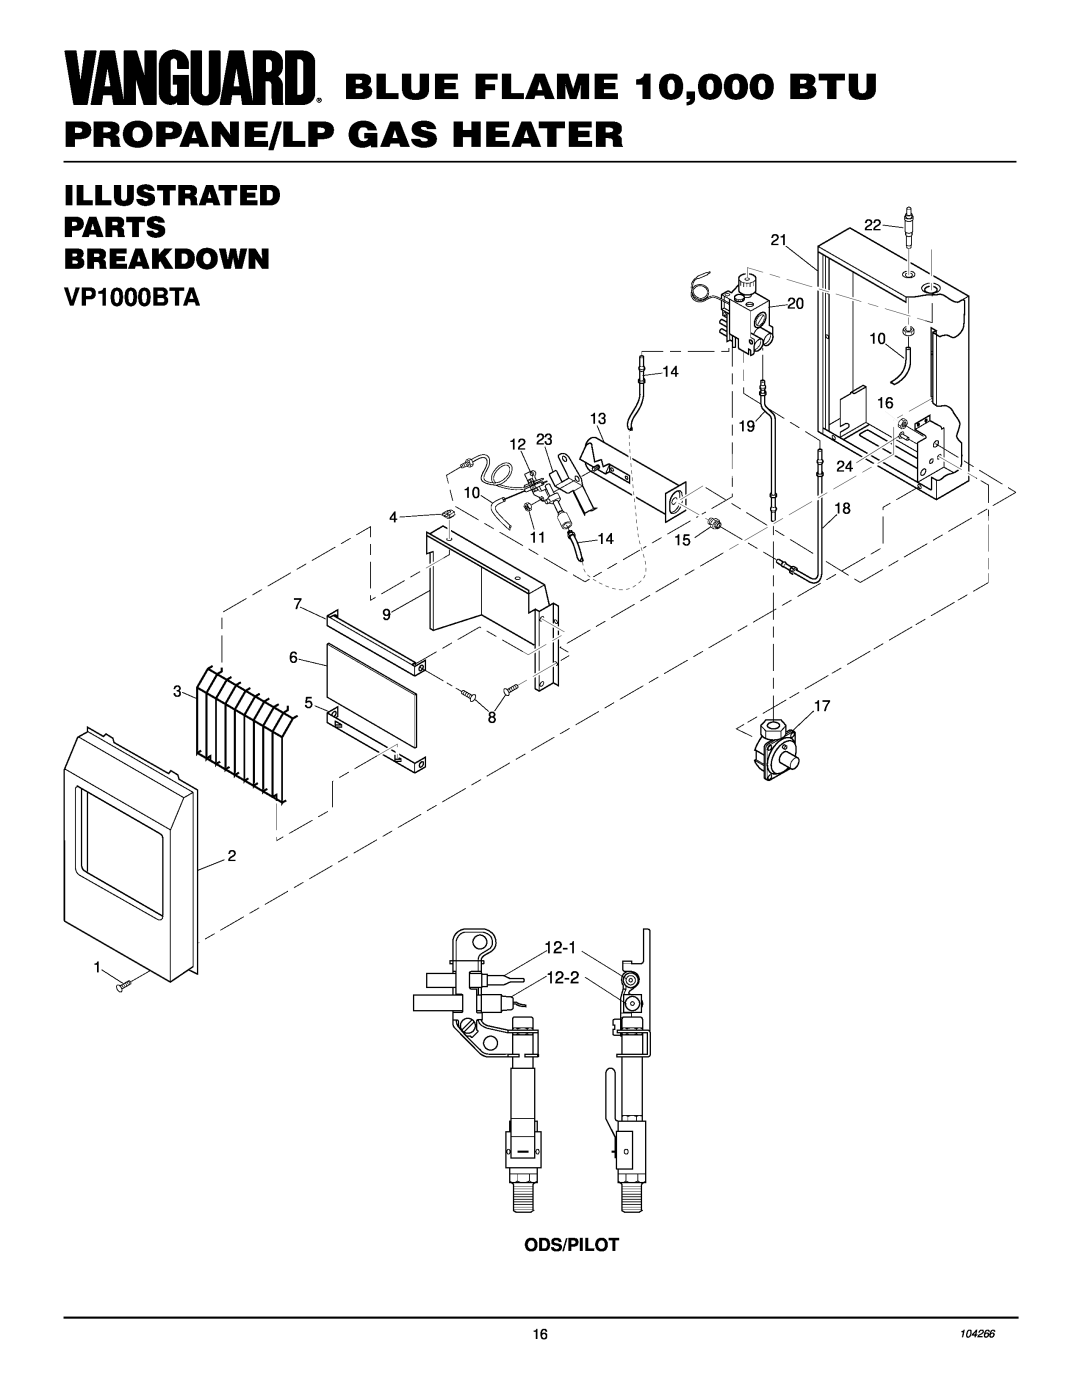 Desa VP1000BTA installation manual Illustrated Parts Breakdown, BLUE FLAME 10,000 BTU PROPANE/LP GAS HEATER, 12-1 